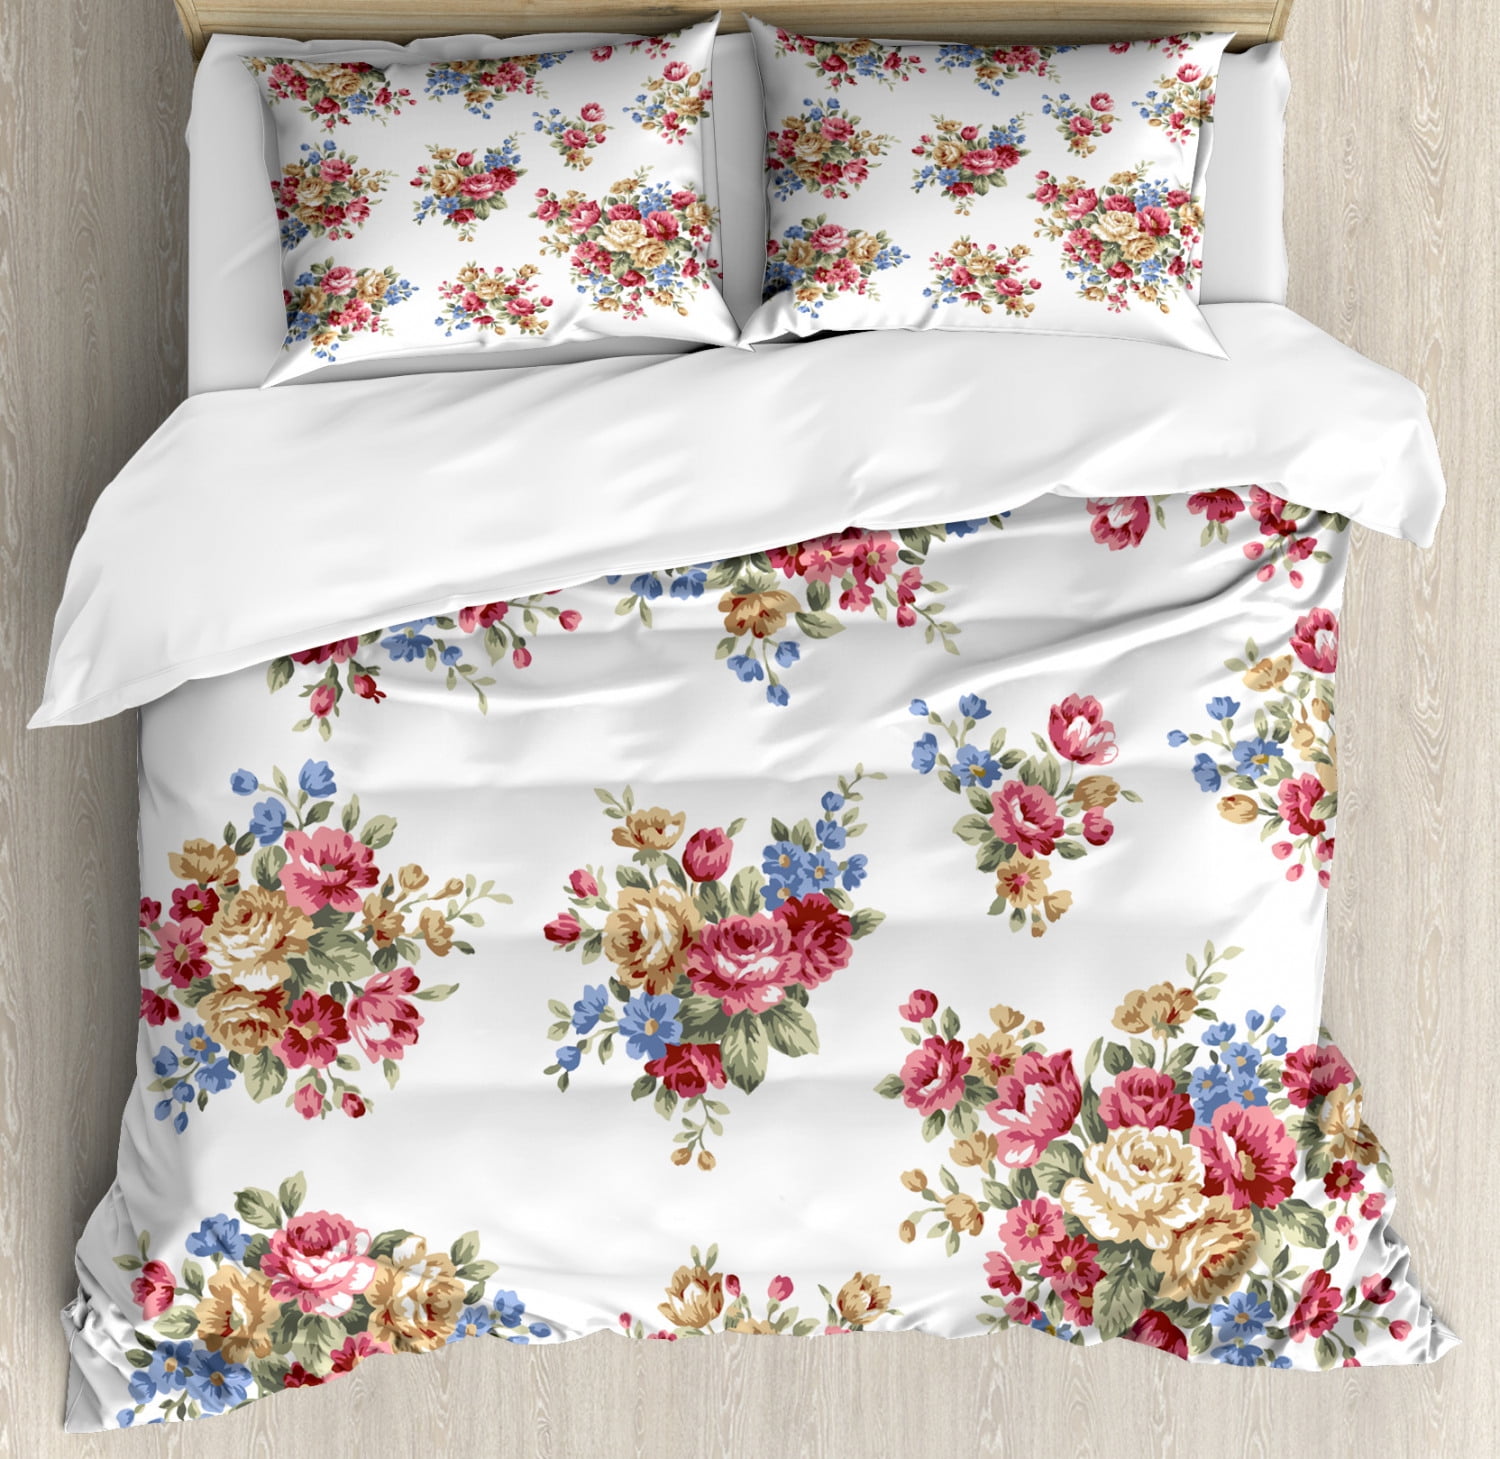 3D Red Rose Queen Bedding Set Flower Print Comforter Set 4Pcs 2019 New S-50 